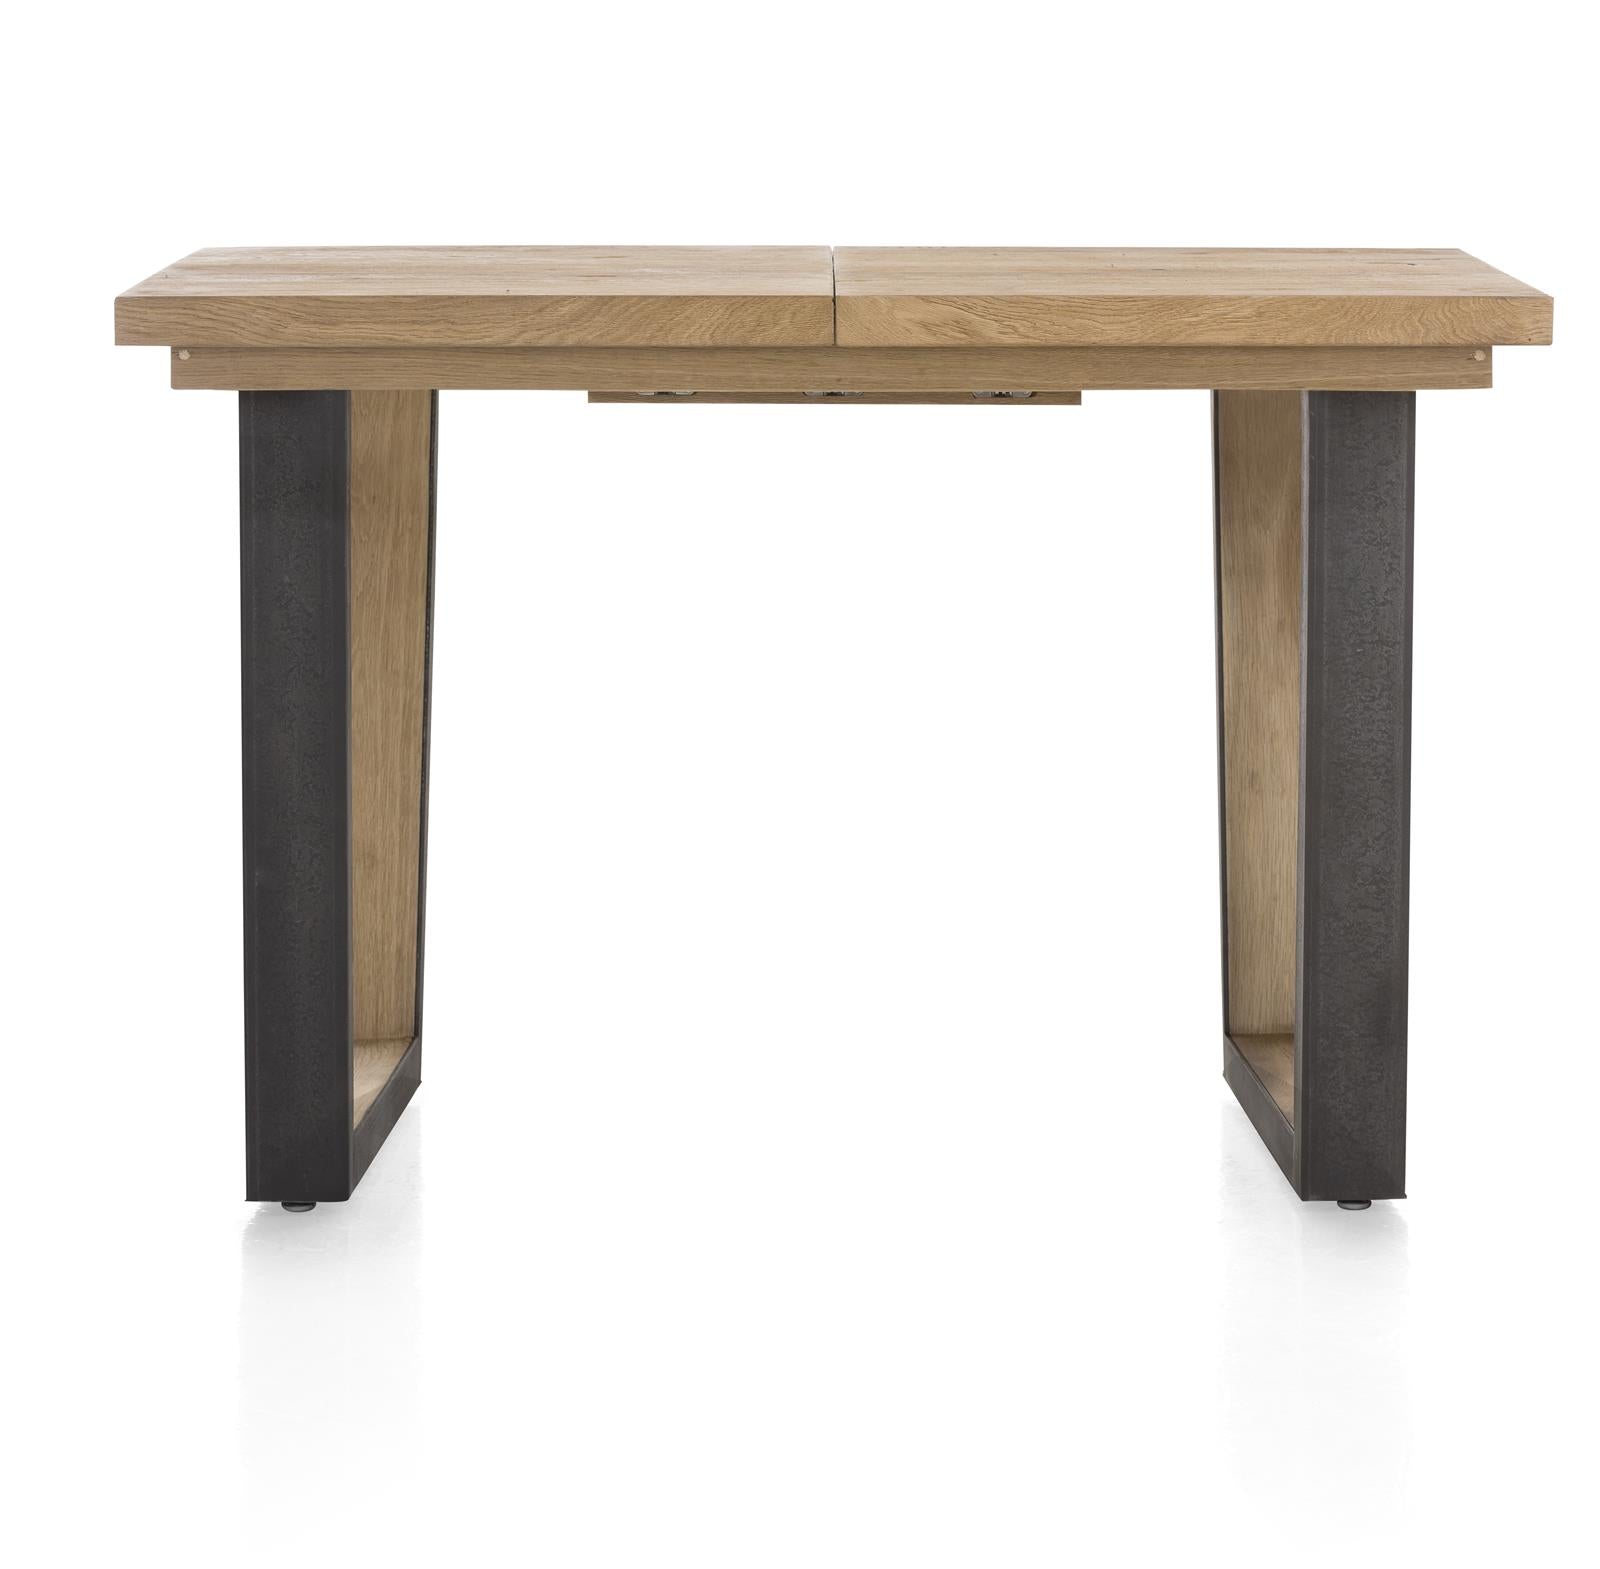 [Habufa_Cleveland]-Dining Tables-Habufa-140 x 90 cms ext:-U shape metal legs wood insert-Straight edge-Against The Grain Furniture